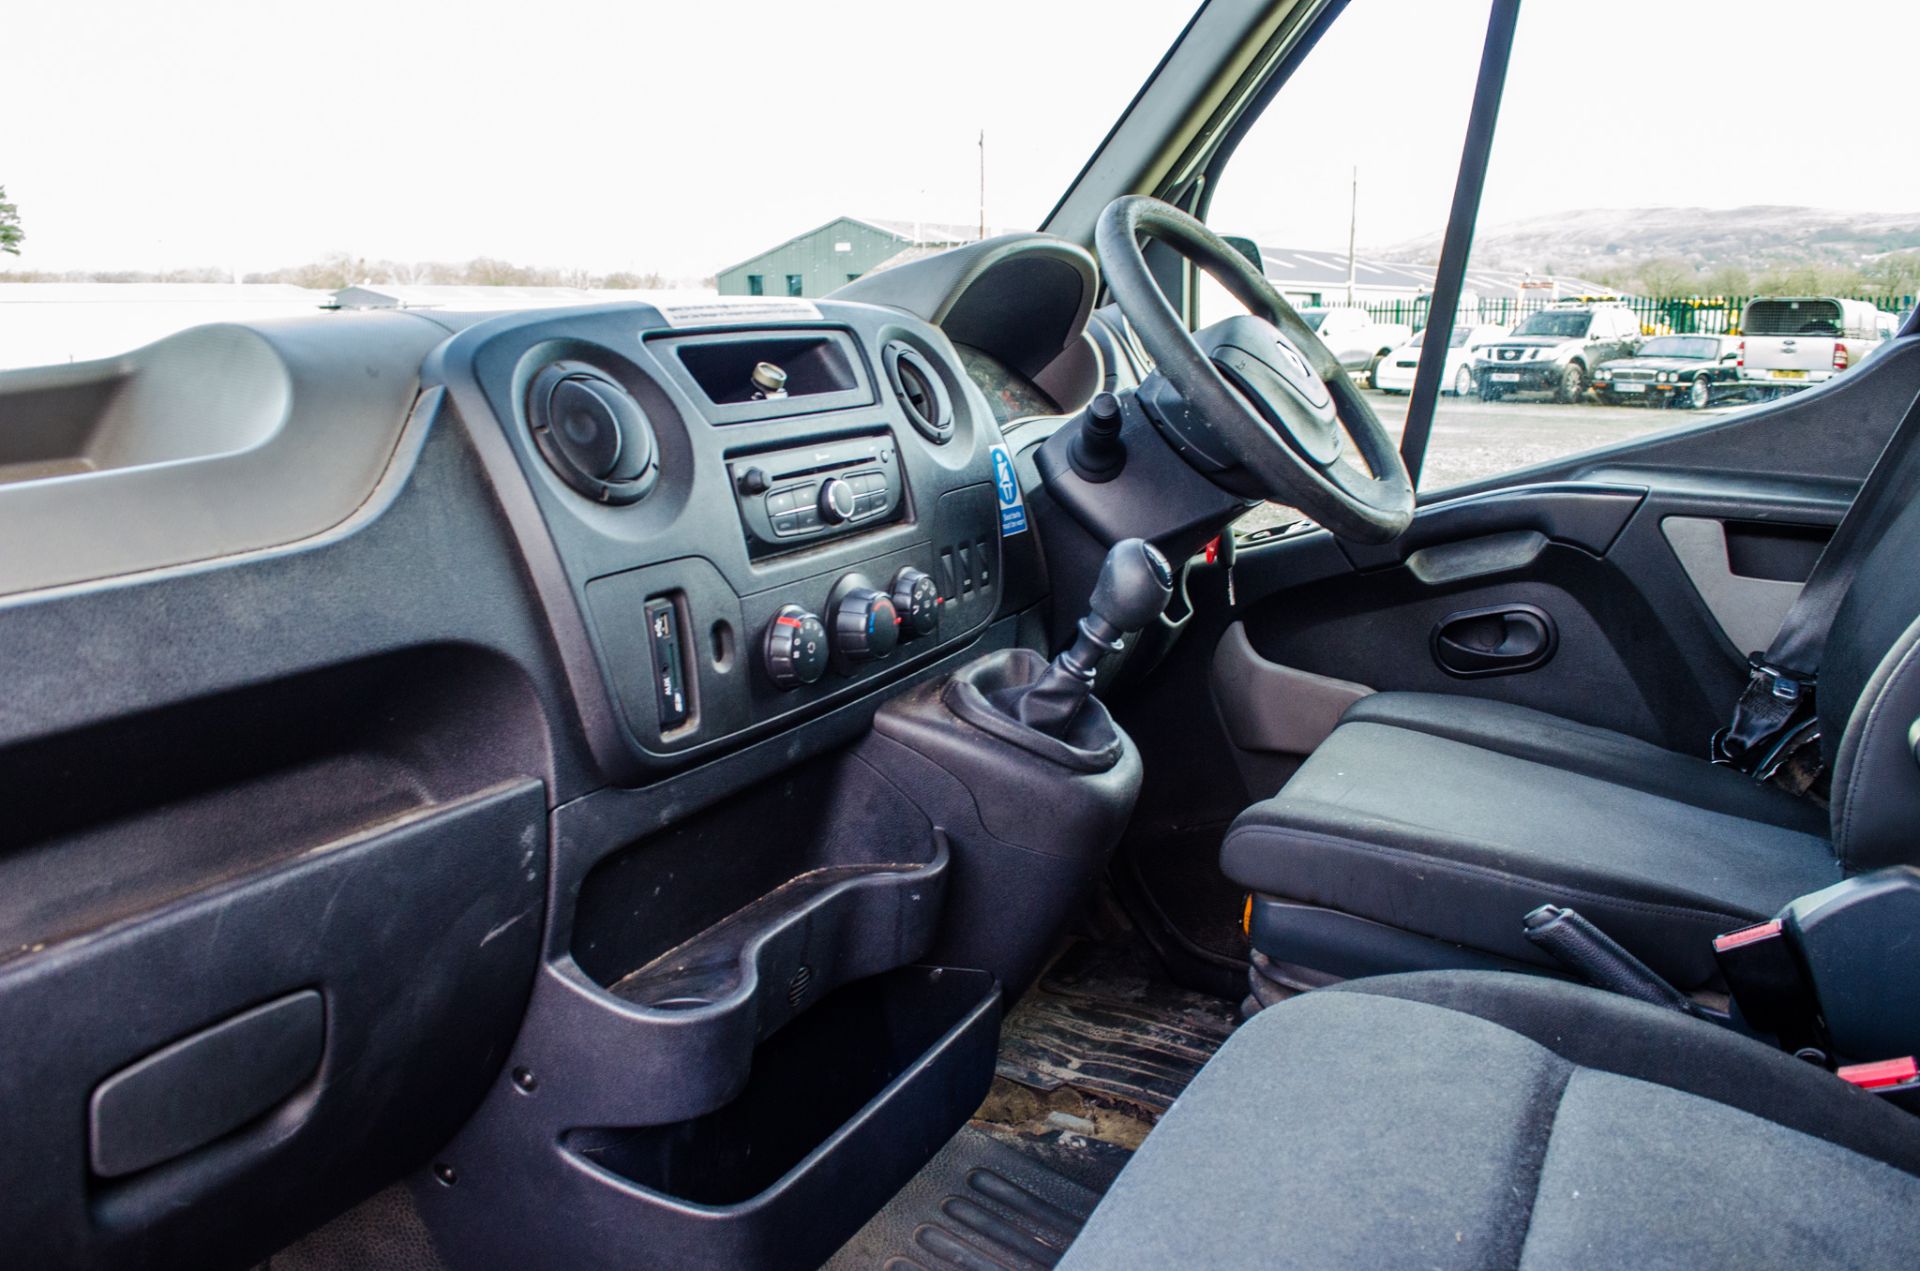 Renault Master Business DCI 135 LM35 diesel driven seat panel van - Image 18 of 21